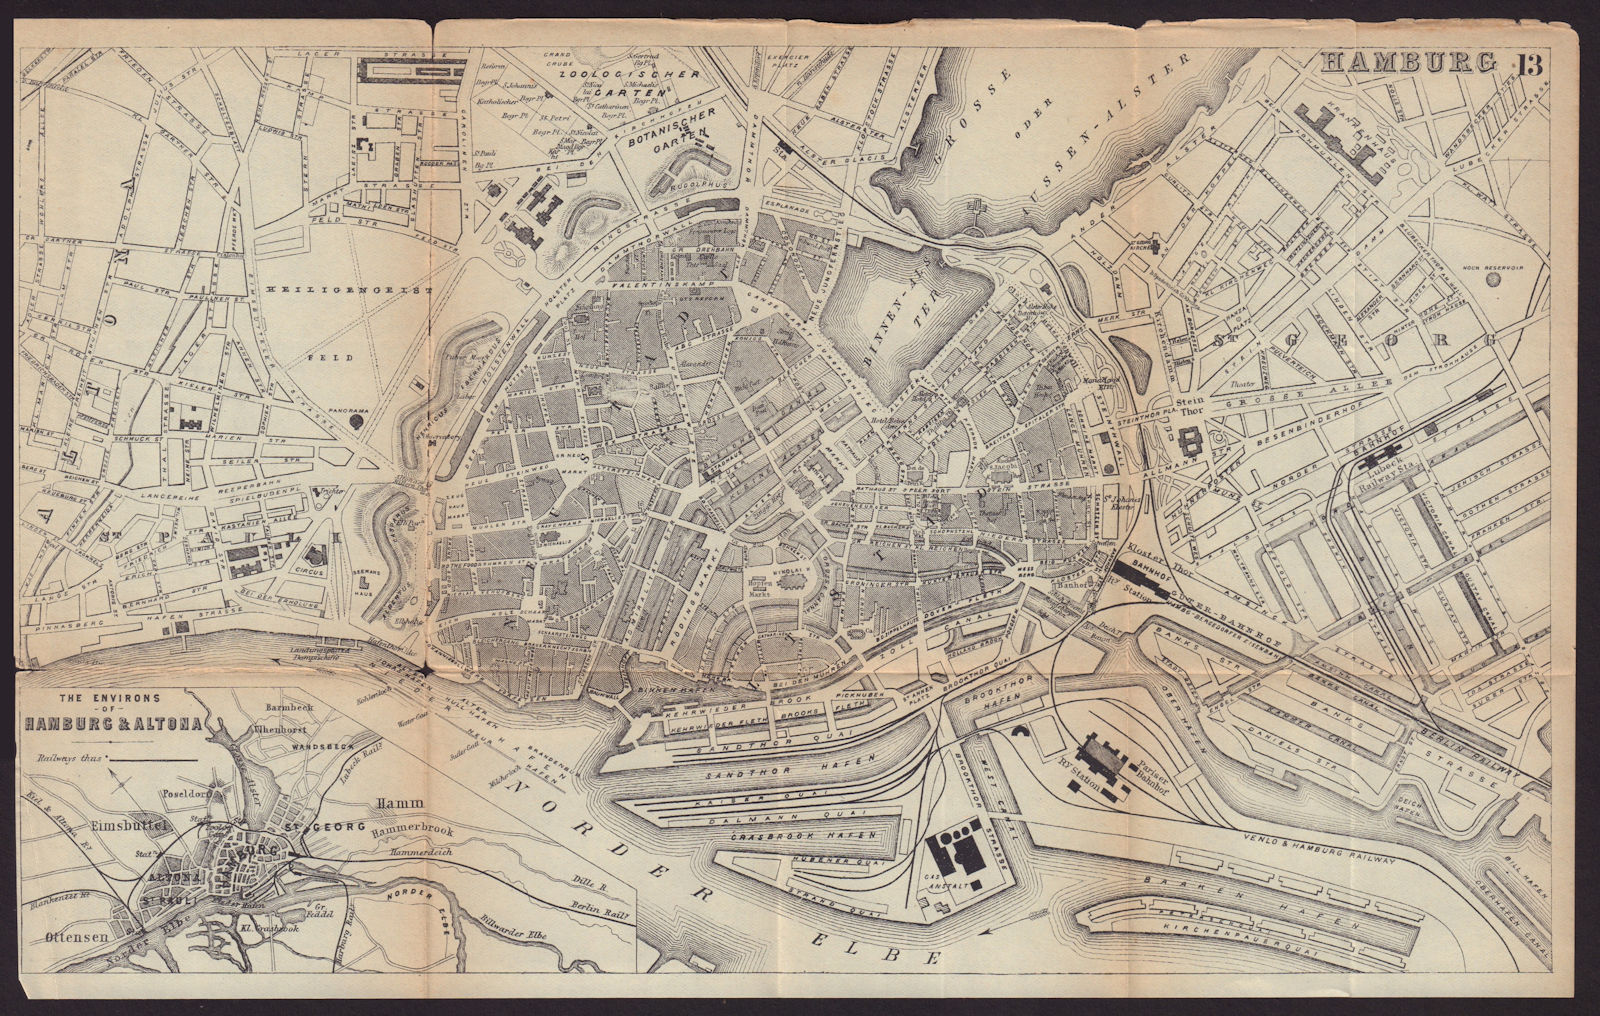 HAMBURG antique town plan city map. Germany. BRADSHAW c1898 old